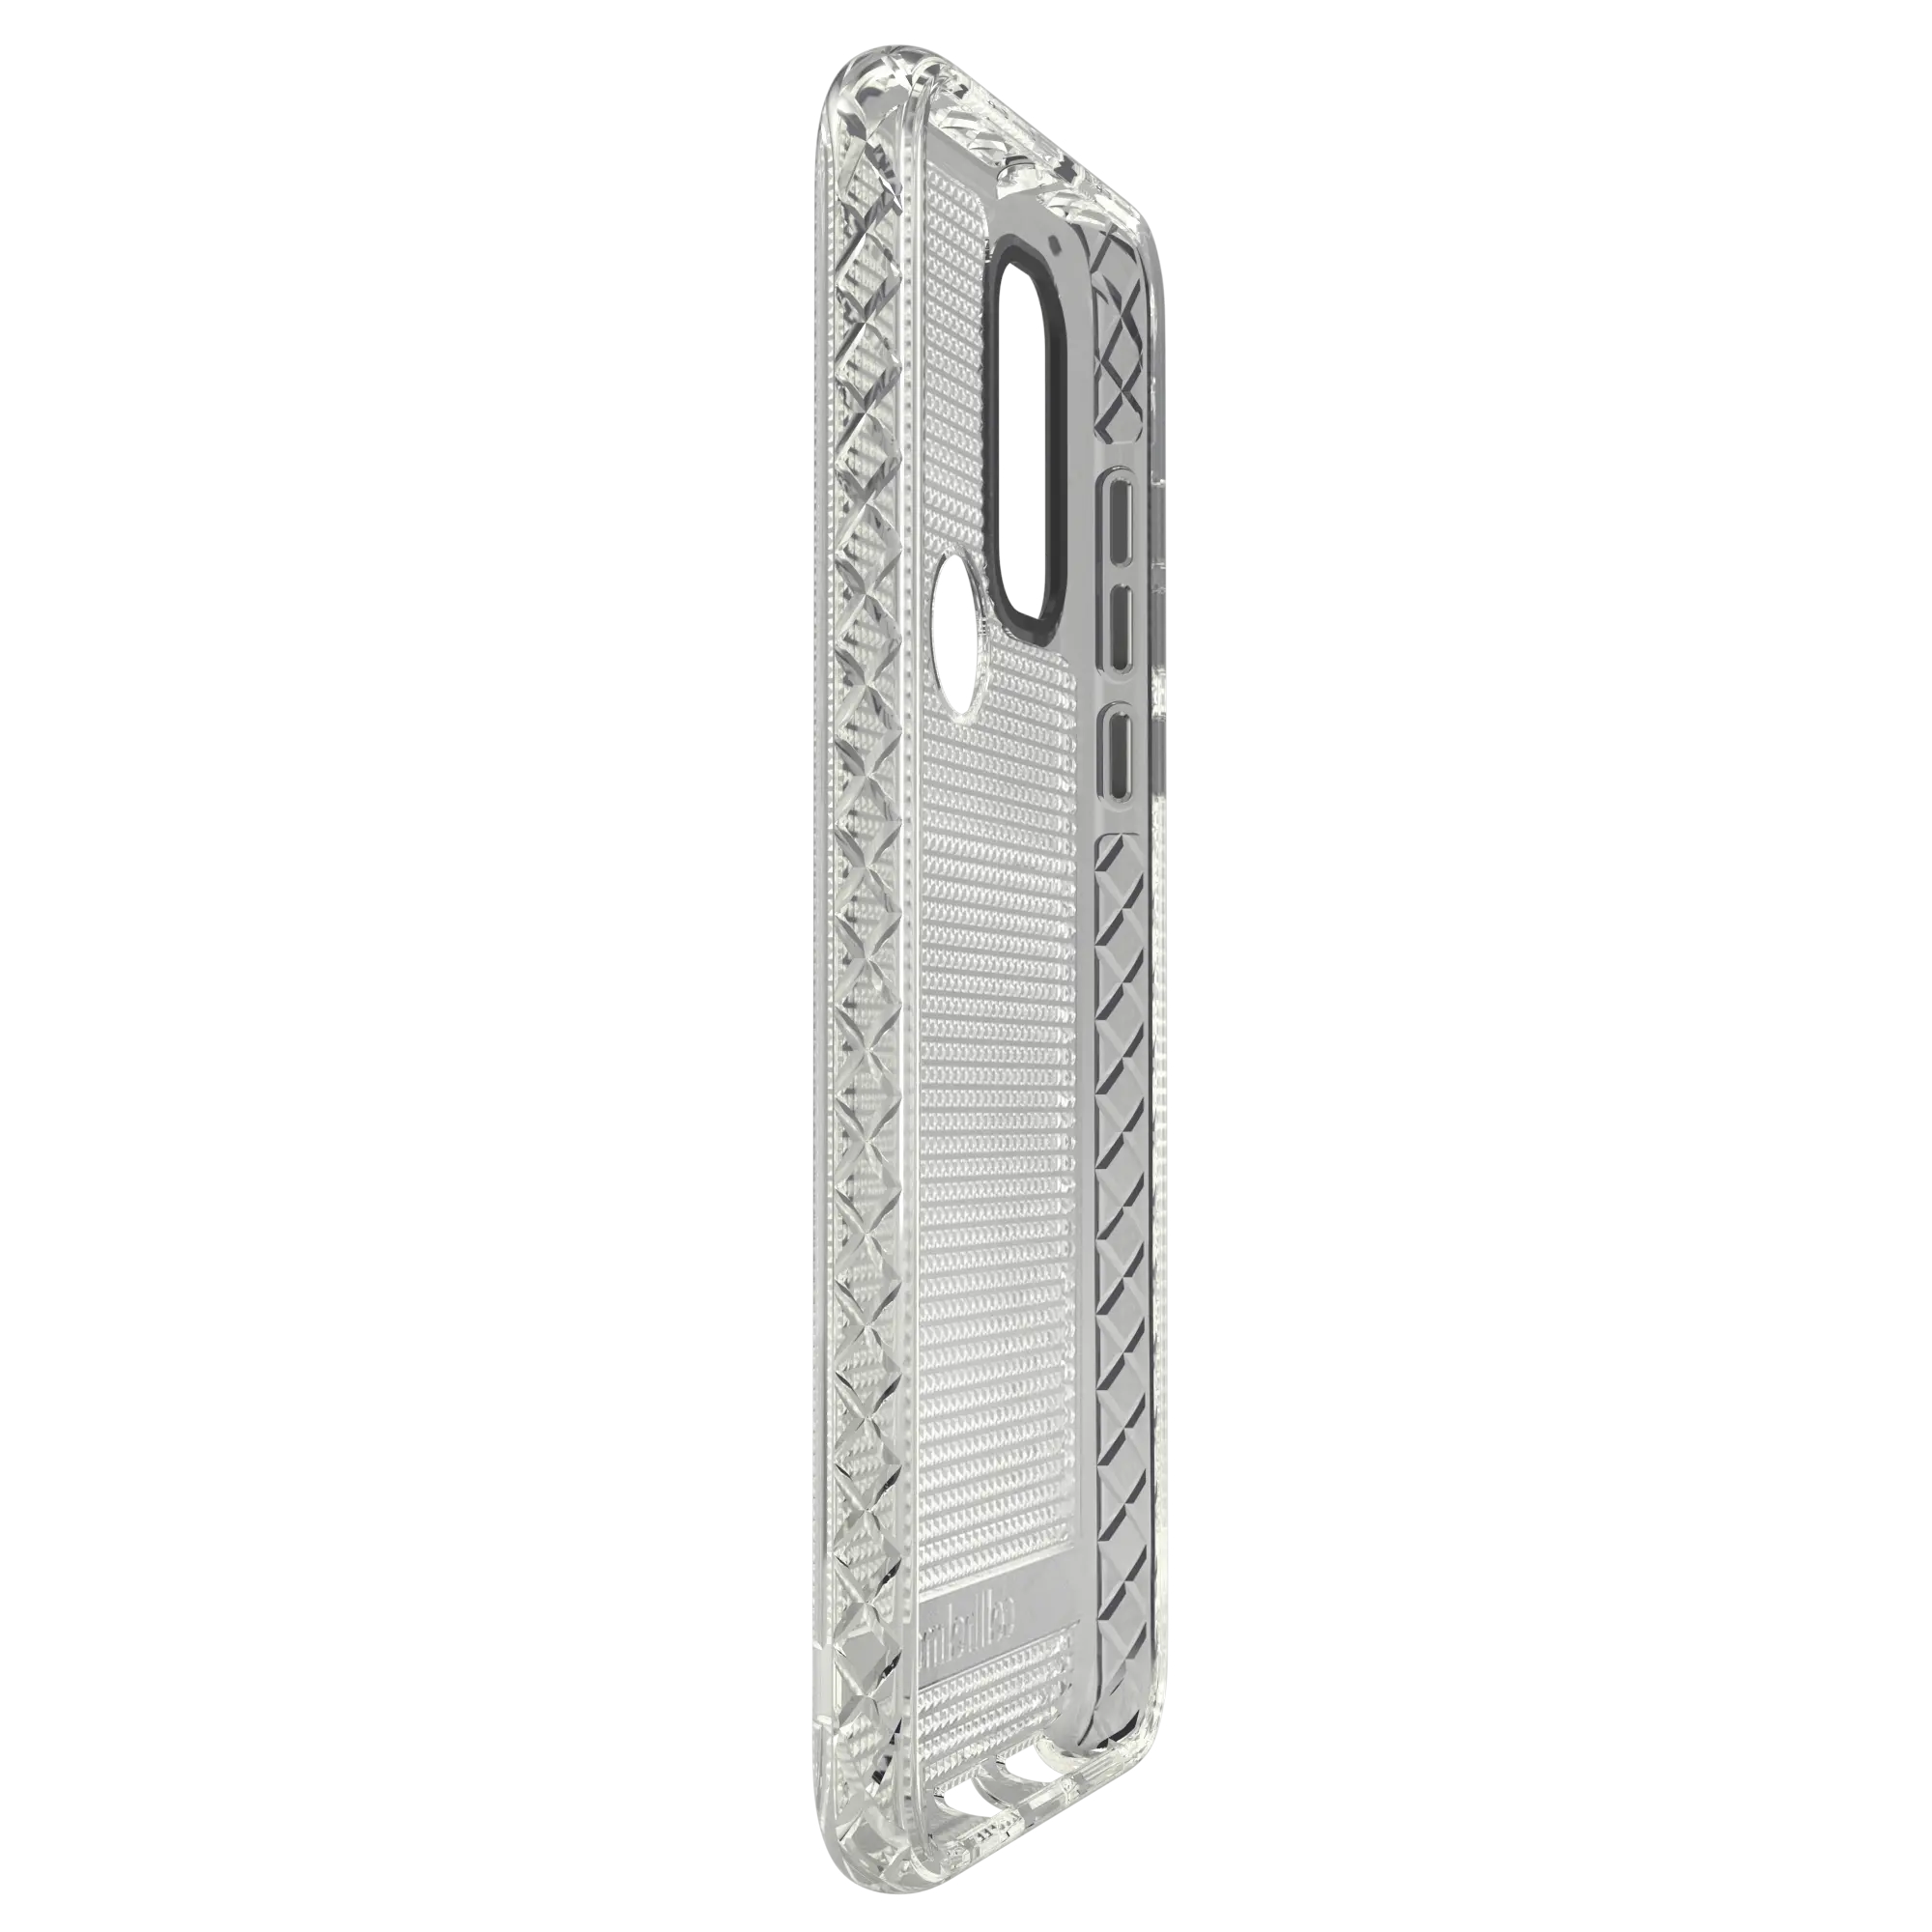 Altitude X Series for Motorola Moto G Pure  - Clear - Case -  - cellhelmet